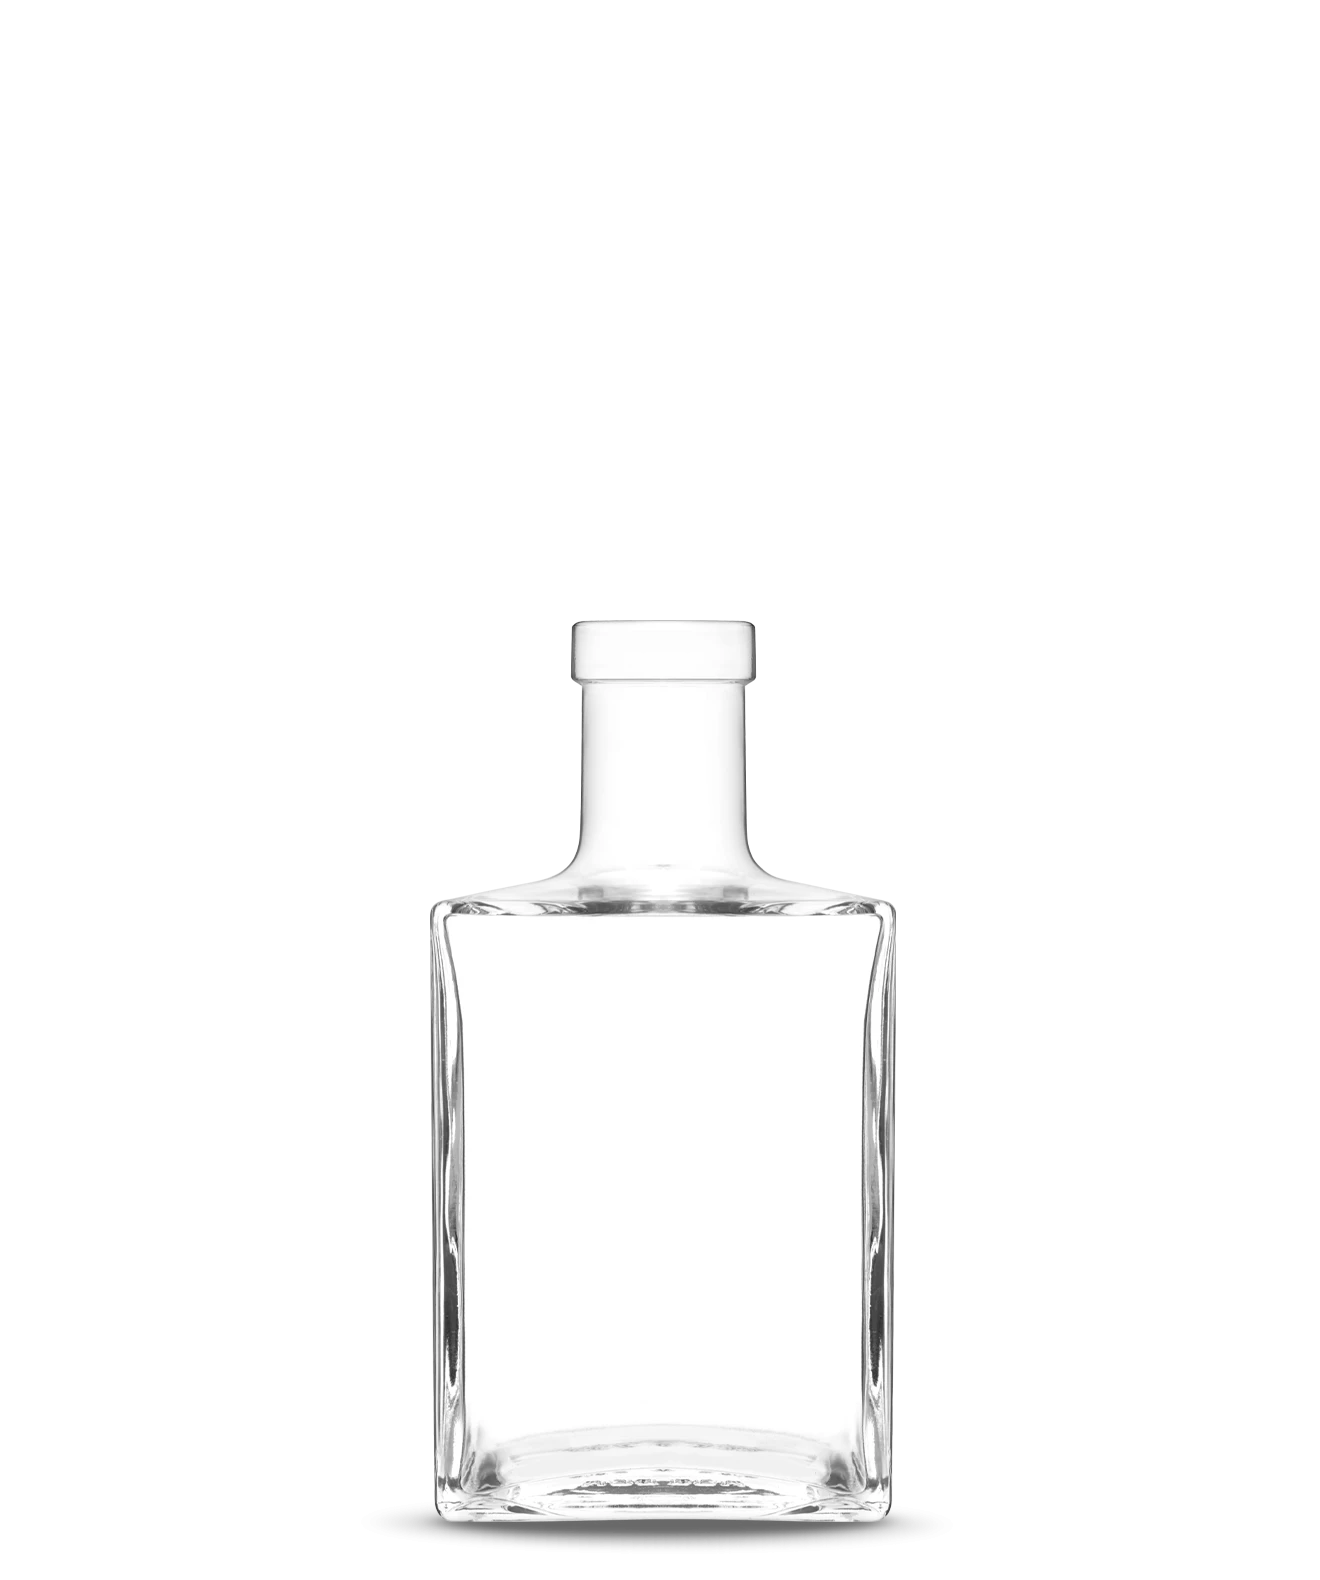 PAMELA Fragrances Parfums ambiance Vetroelite View 1